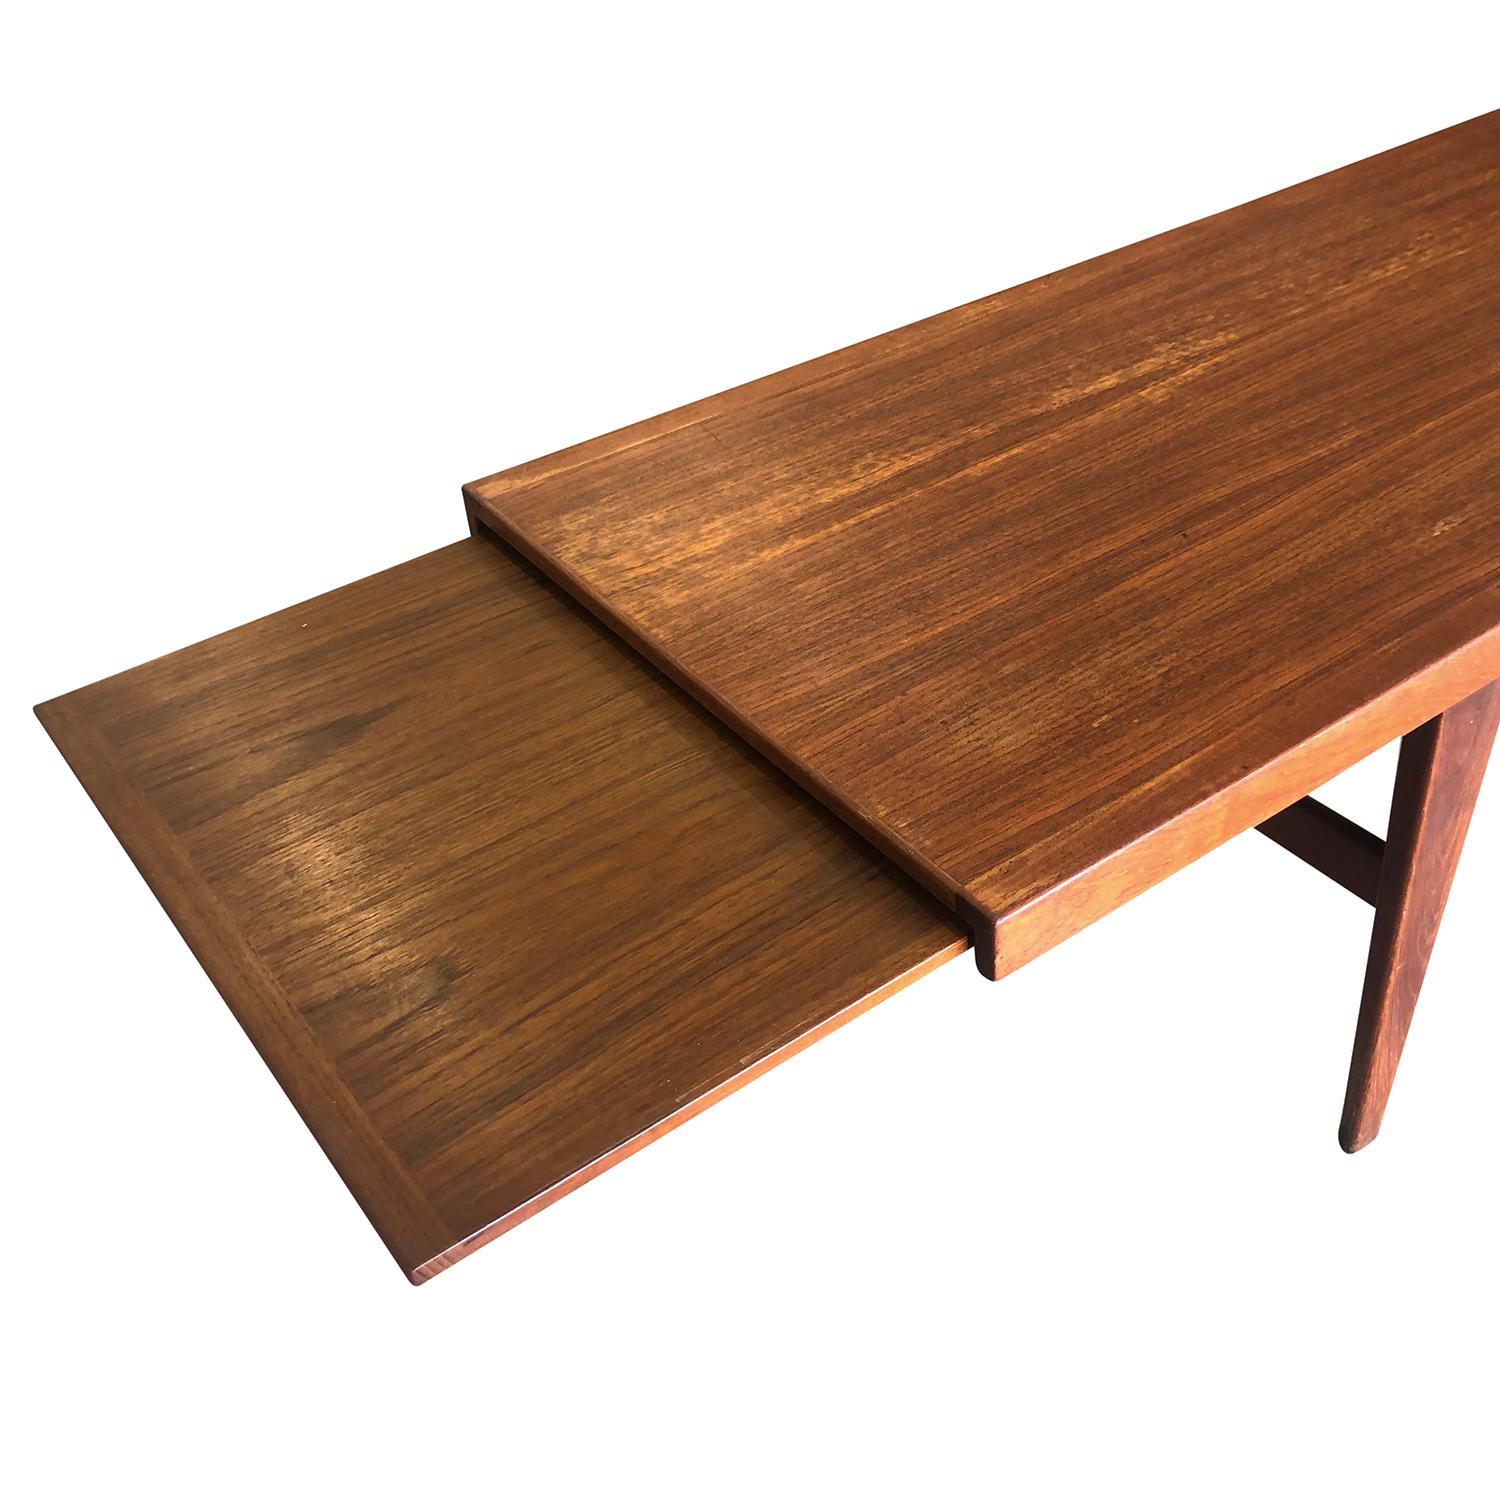 20th Century Danish Teak Coffee Table - Large Vintage Scandinavian Side Table For Sale 1